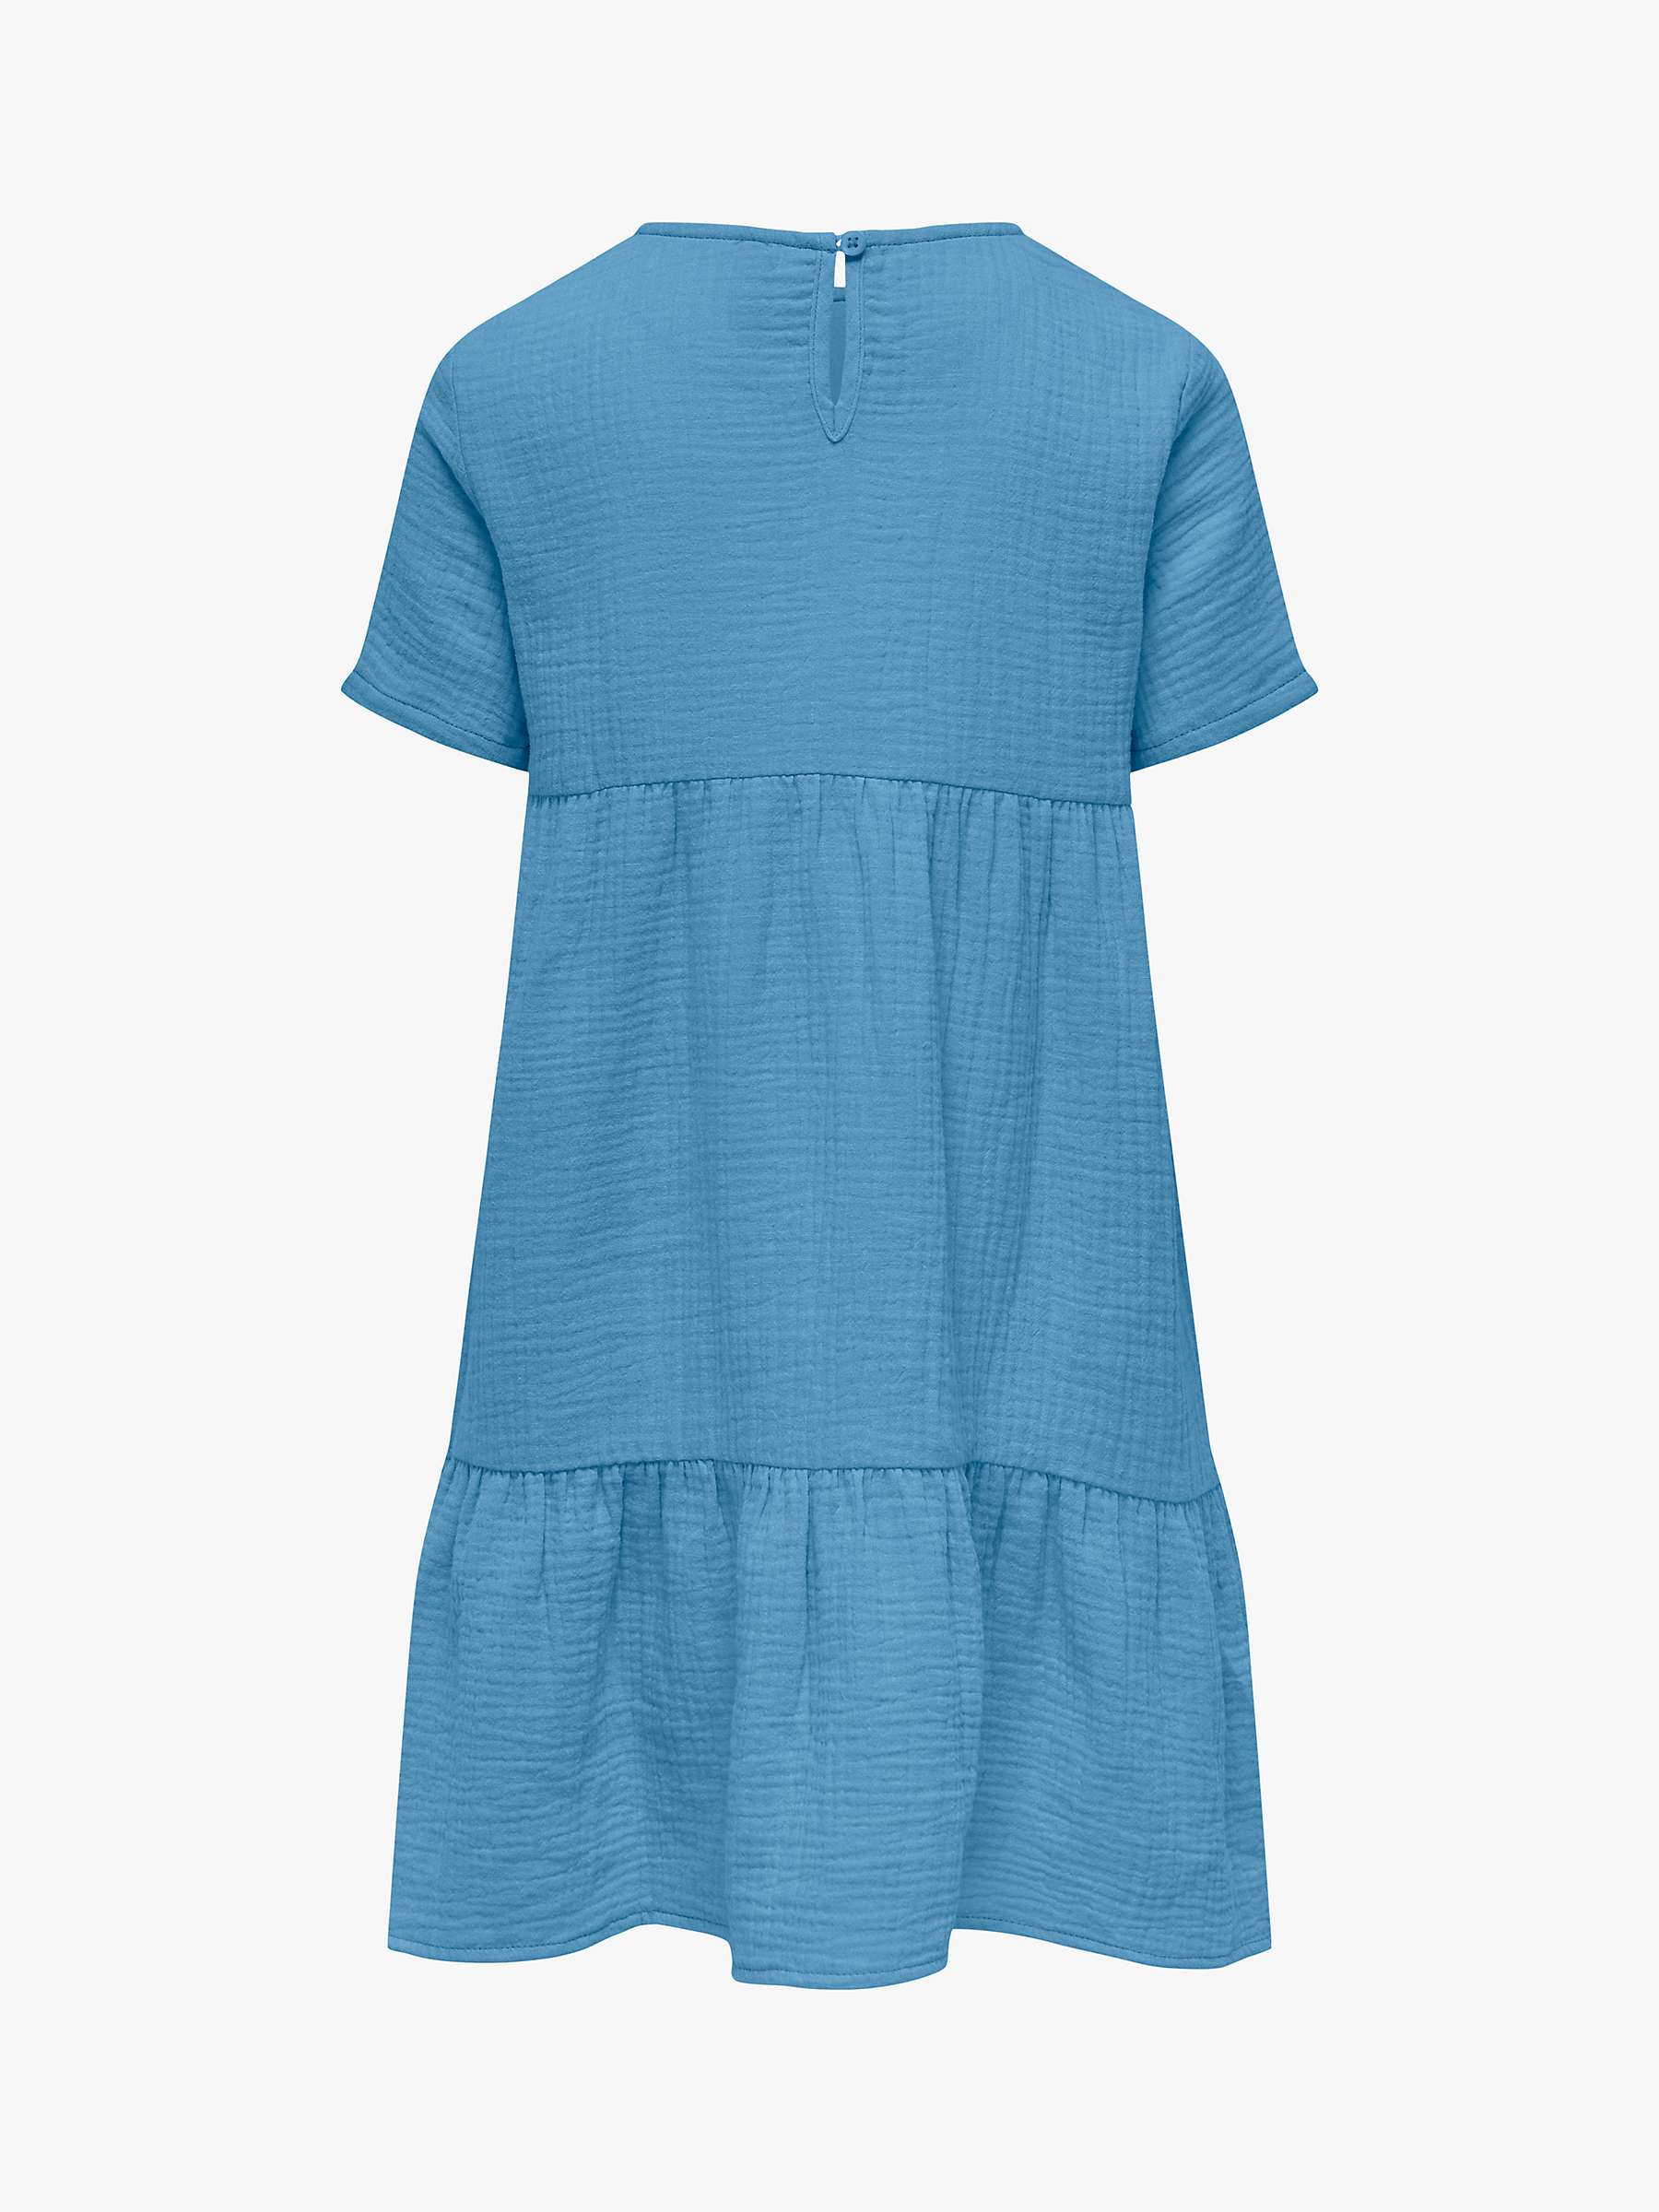 Buy KIDS ONLY Kids' Cotton Layered Short Sleeve Dress, Blissful Blue Online at johnlewis.com